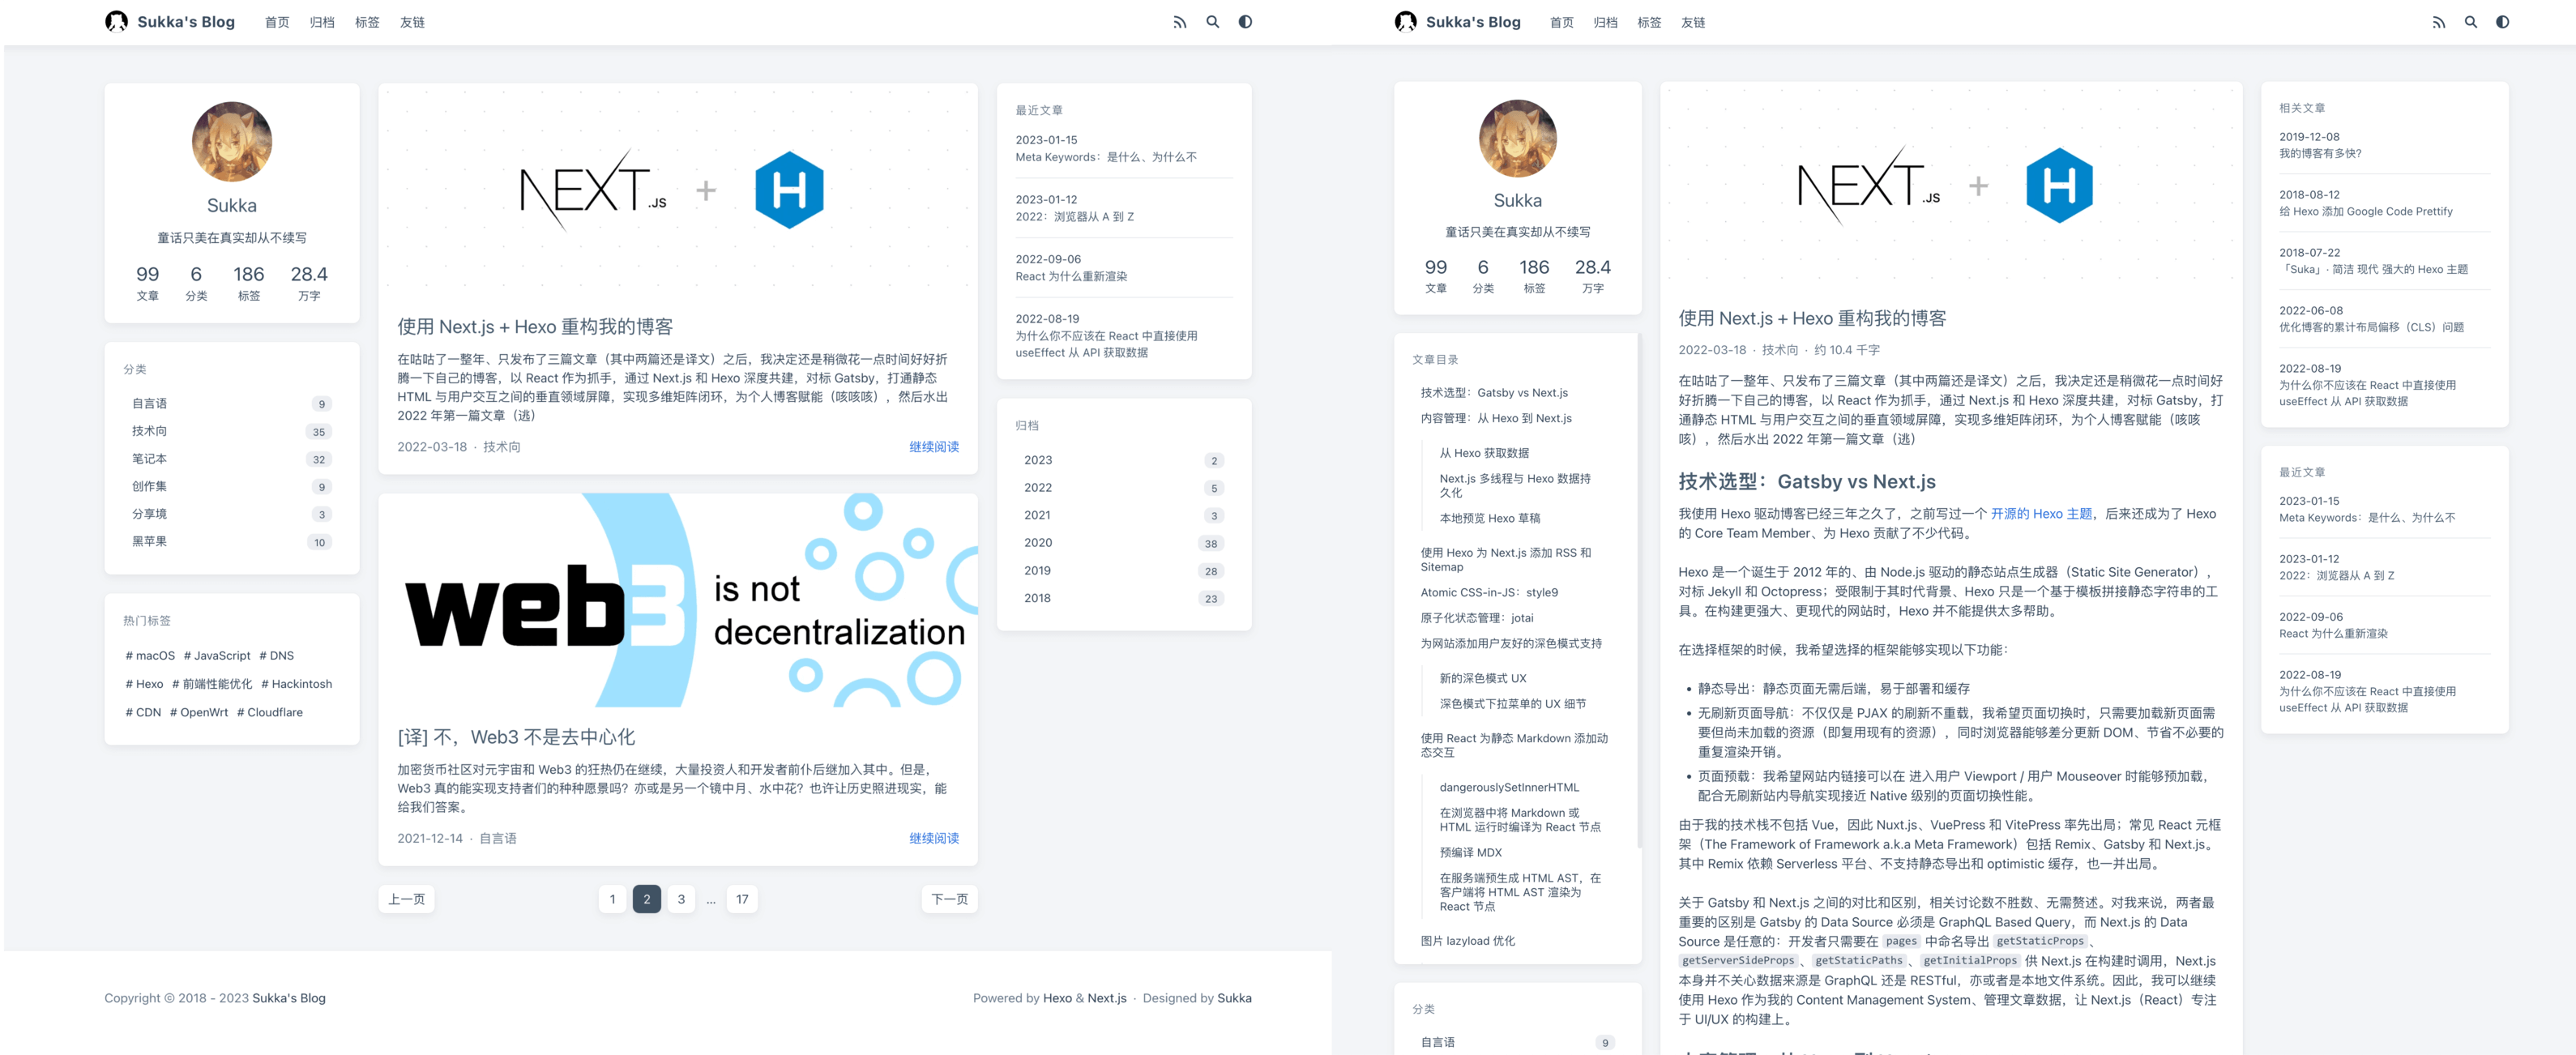 refactor-my-blog-using-nextjs-app-router/blog-layout-screenshot.png